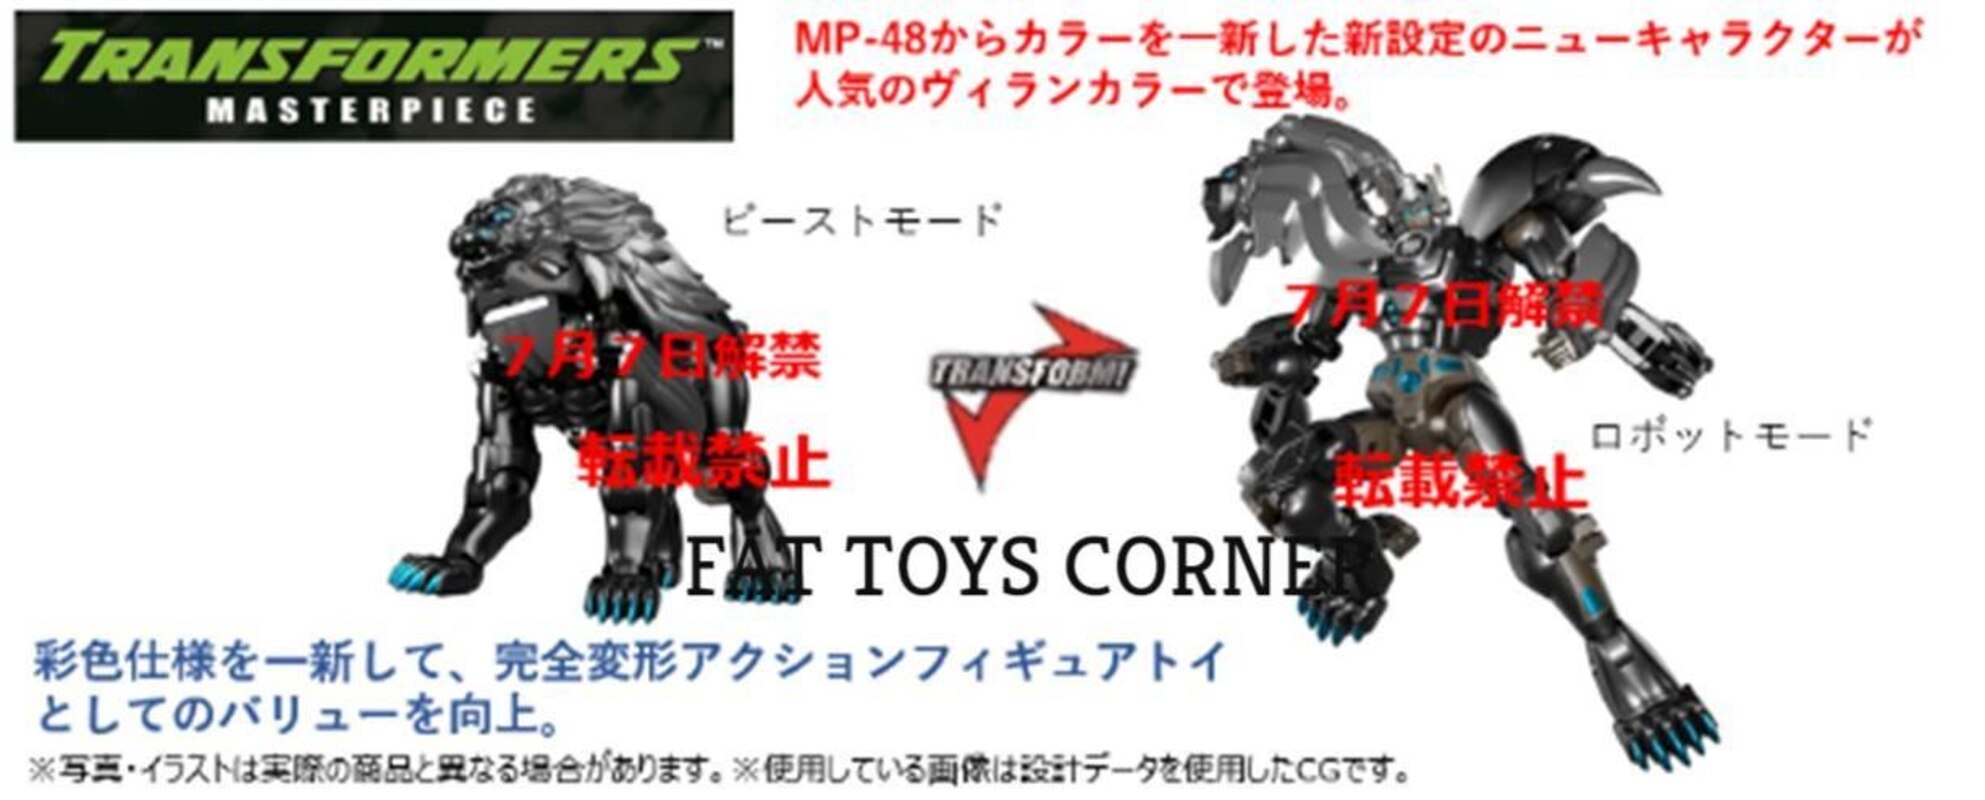 Transformers Masterpiece MP-48+ Nemesis Black Lio Convoy Coming Soon?